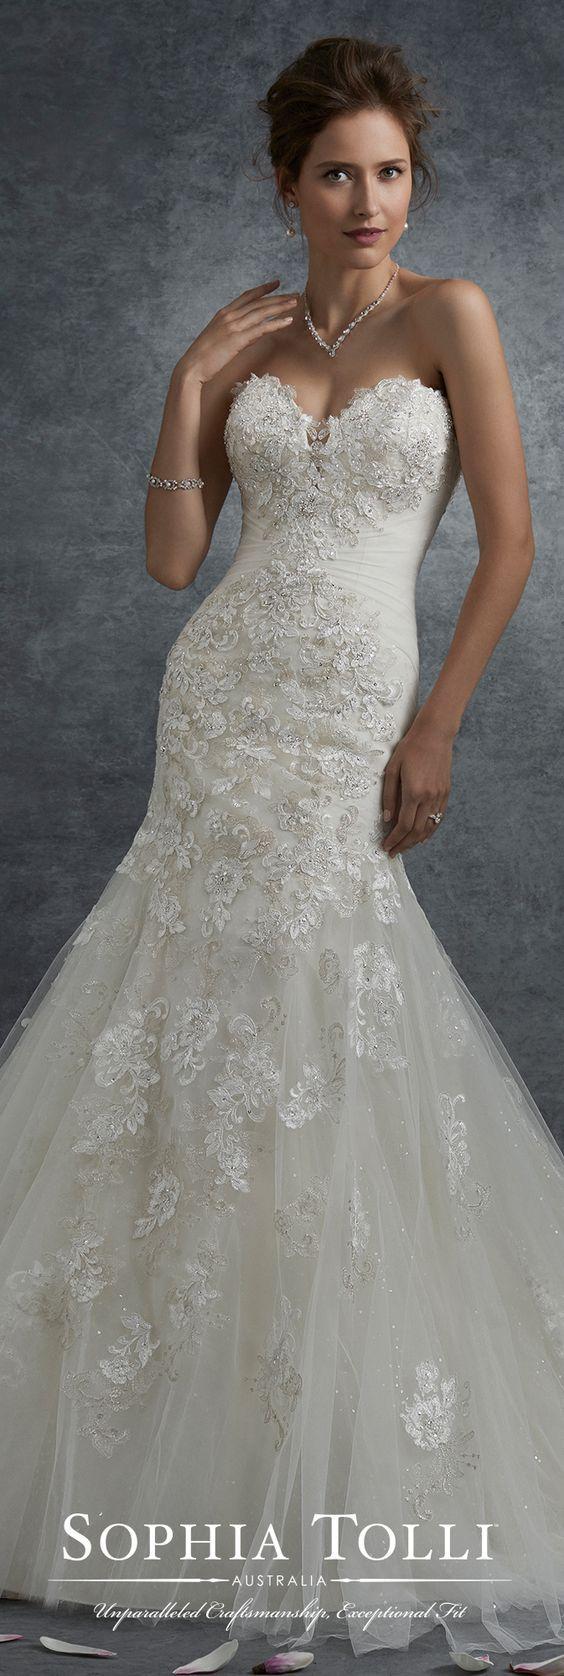 Wedding - Wedding Dress Inspiration - Sophia Tolli